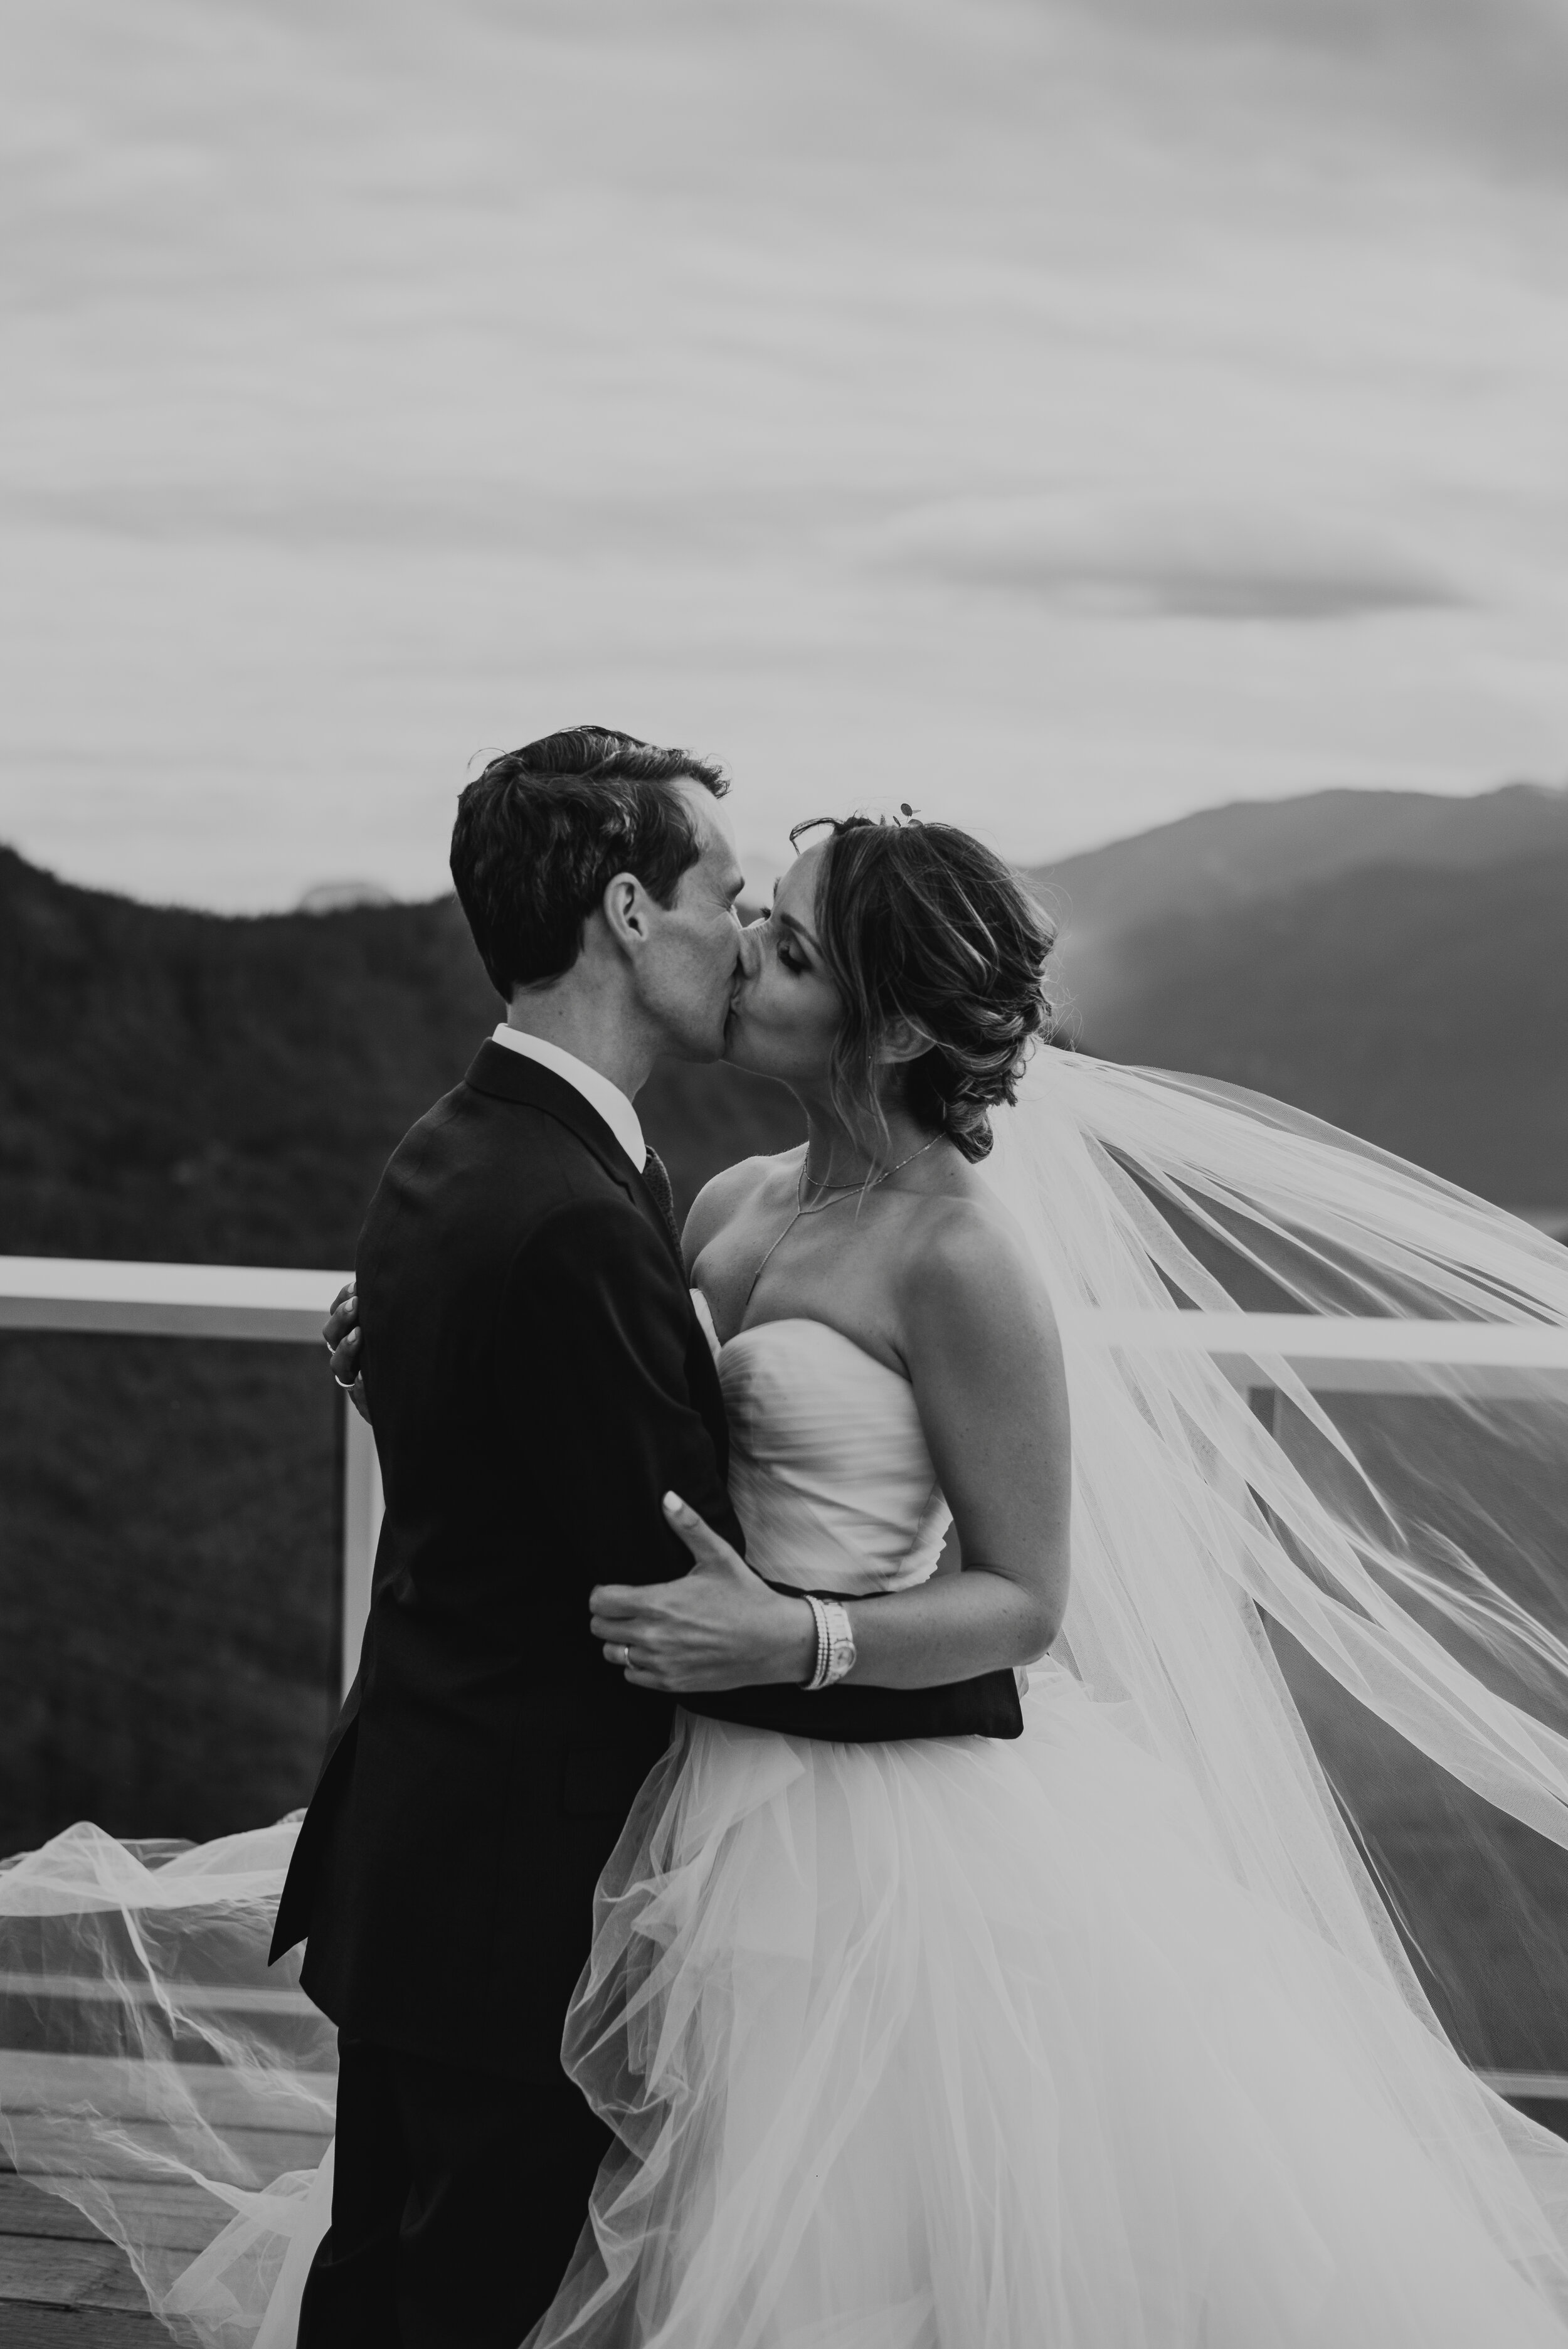 Hayley & Jon Sea to Sky Gondola Wedding - June 17, 2019 - Laura Olson Photography - Sea to Sky Wedding Photographer-3868.jpg